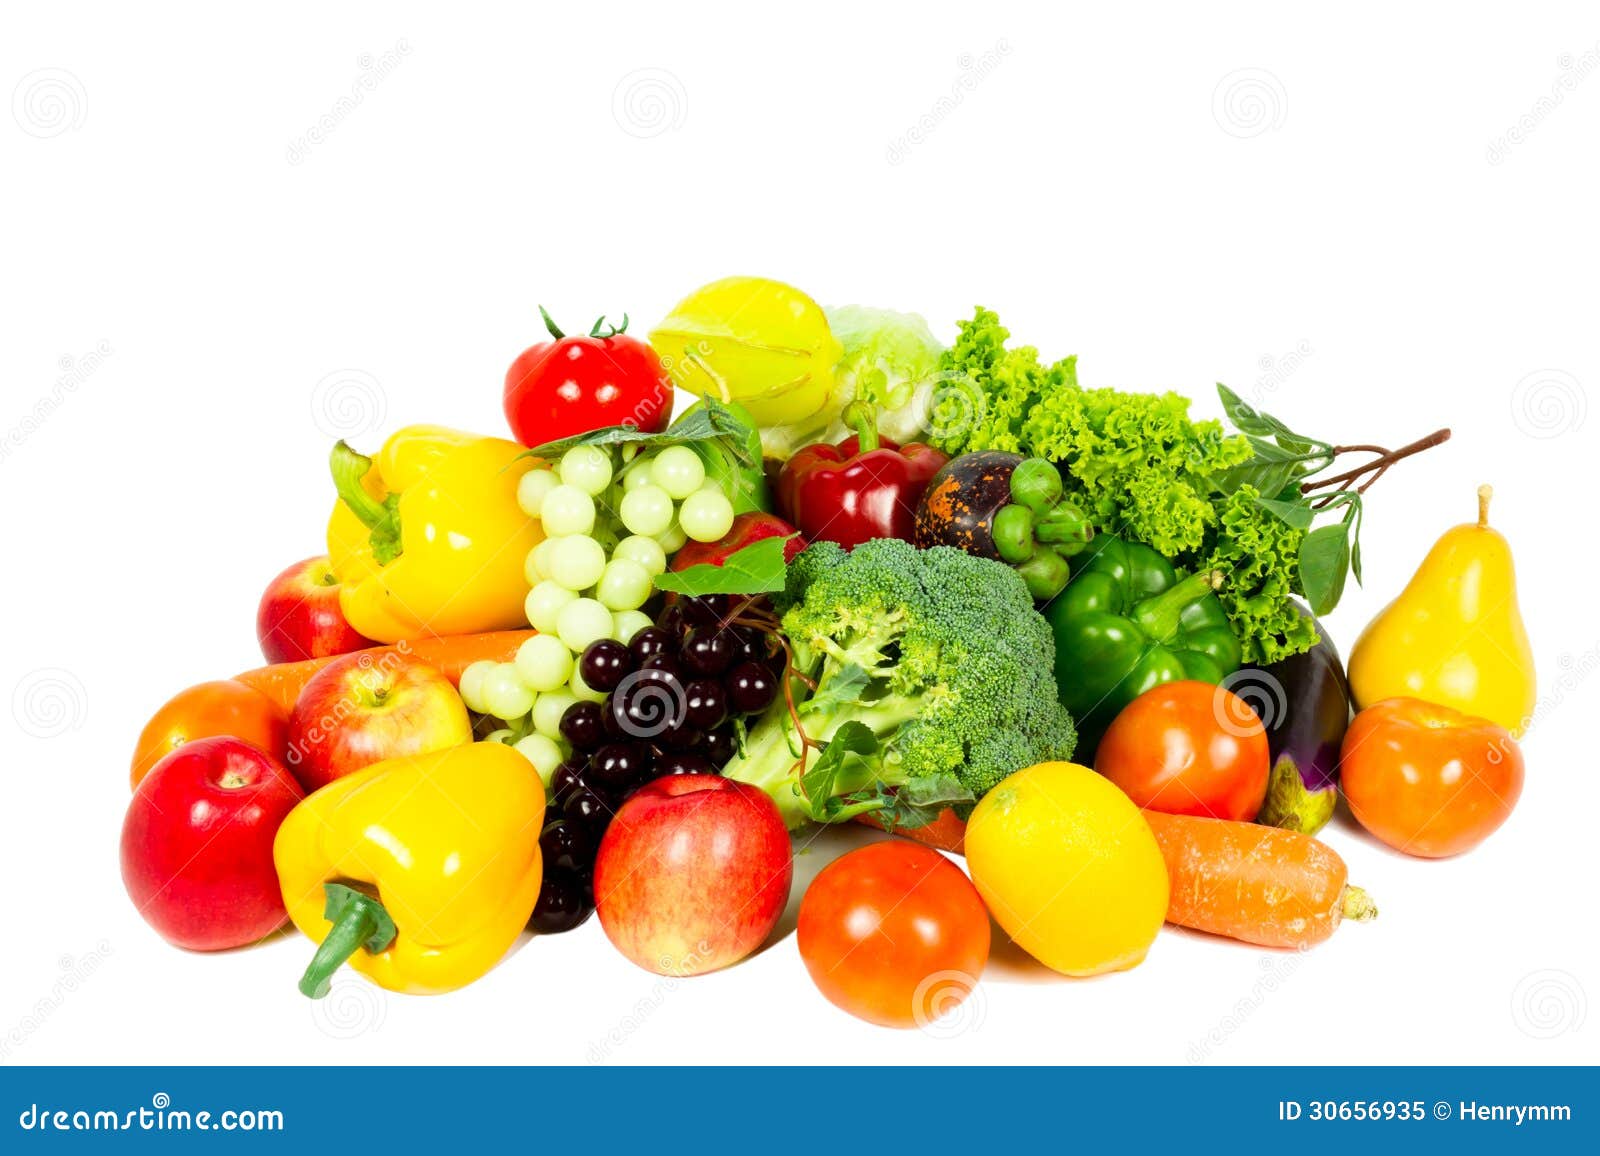 fresh fruits - vegetables